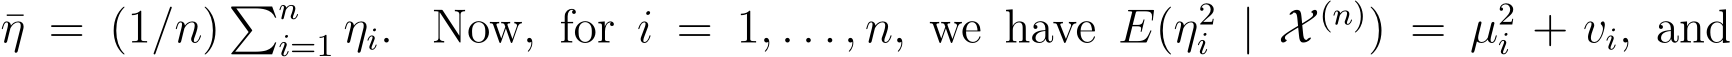 η = (1/n) �ni=1 ηi. Now, for i = 1, . . . , n, we have E(η2i | X (n)) = µ2i + vi, and